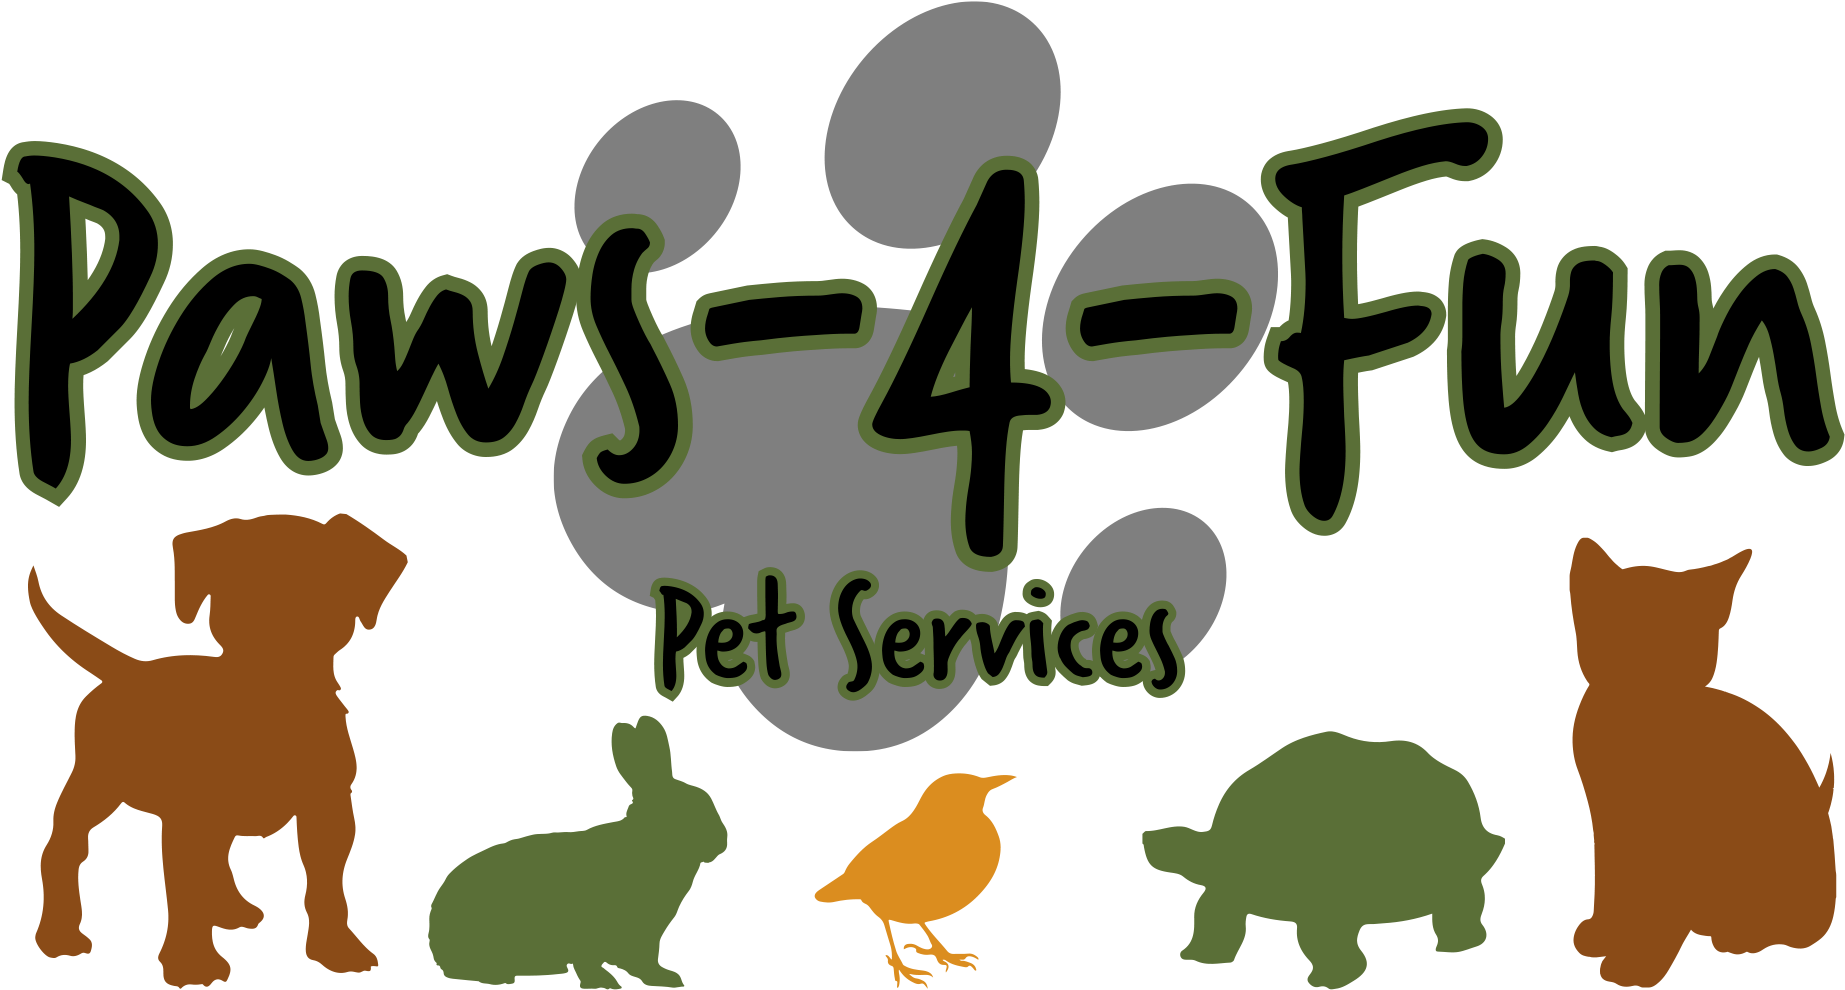 Company Logo - Paws 4 Fun (2352x1110)